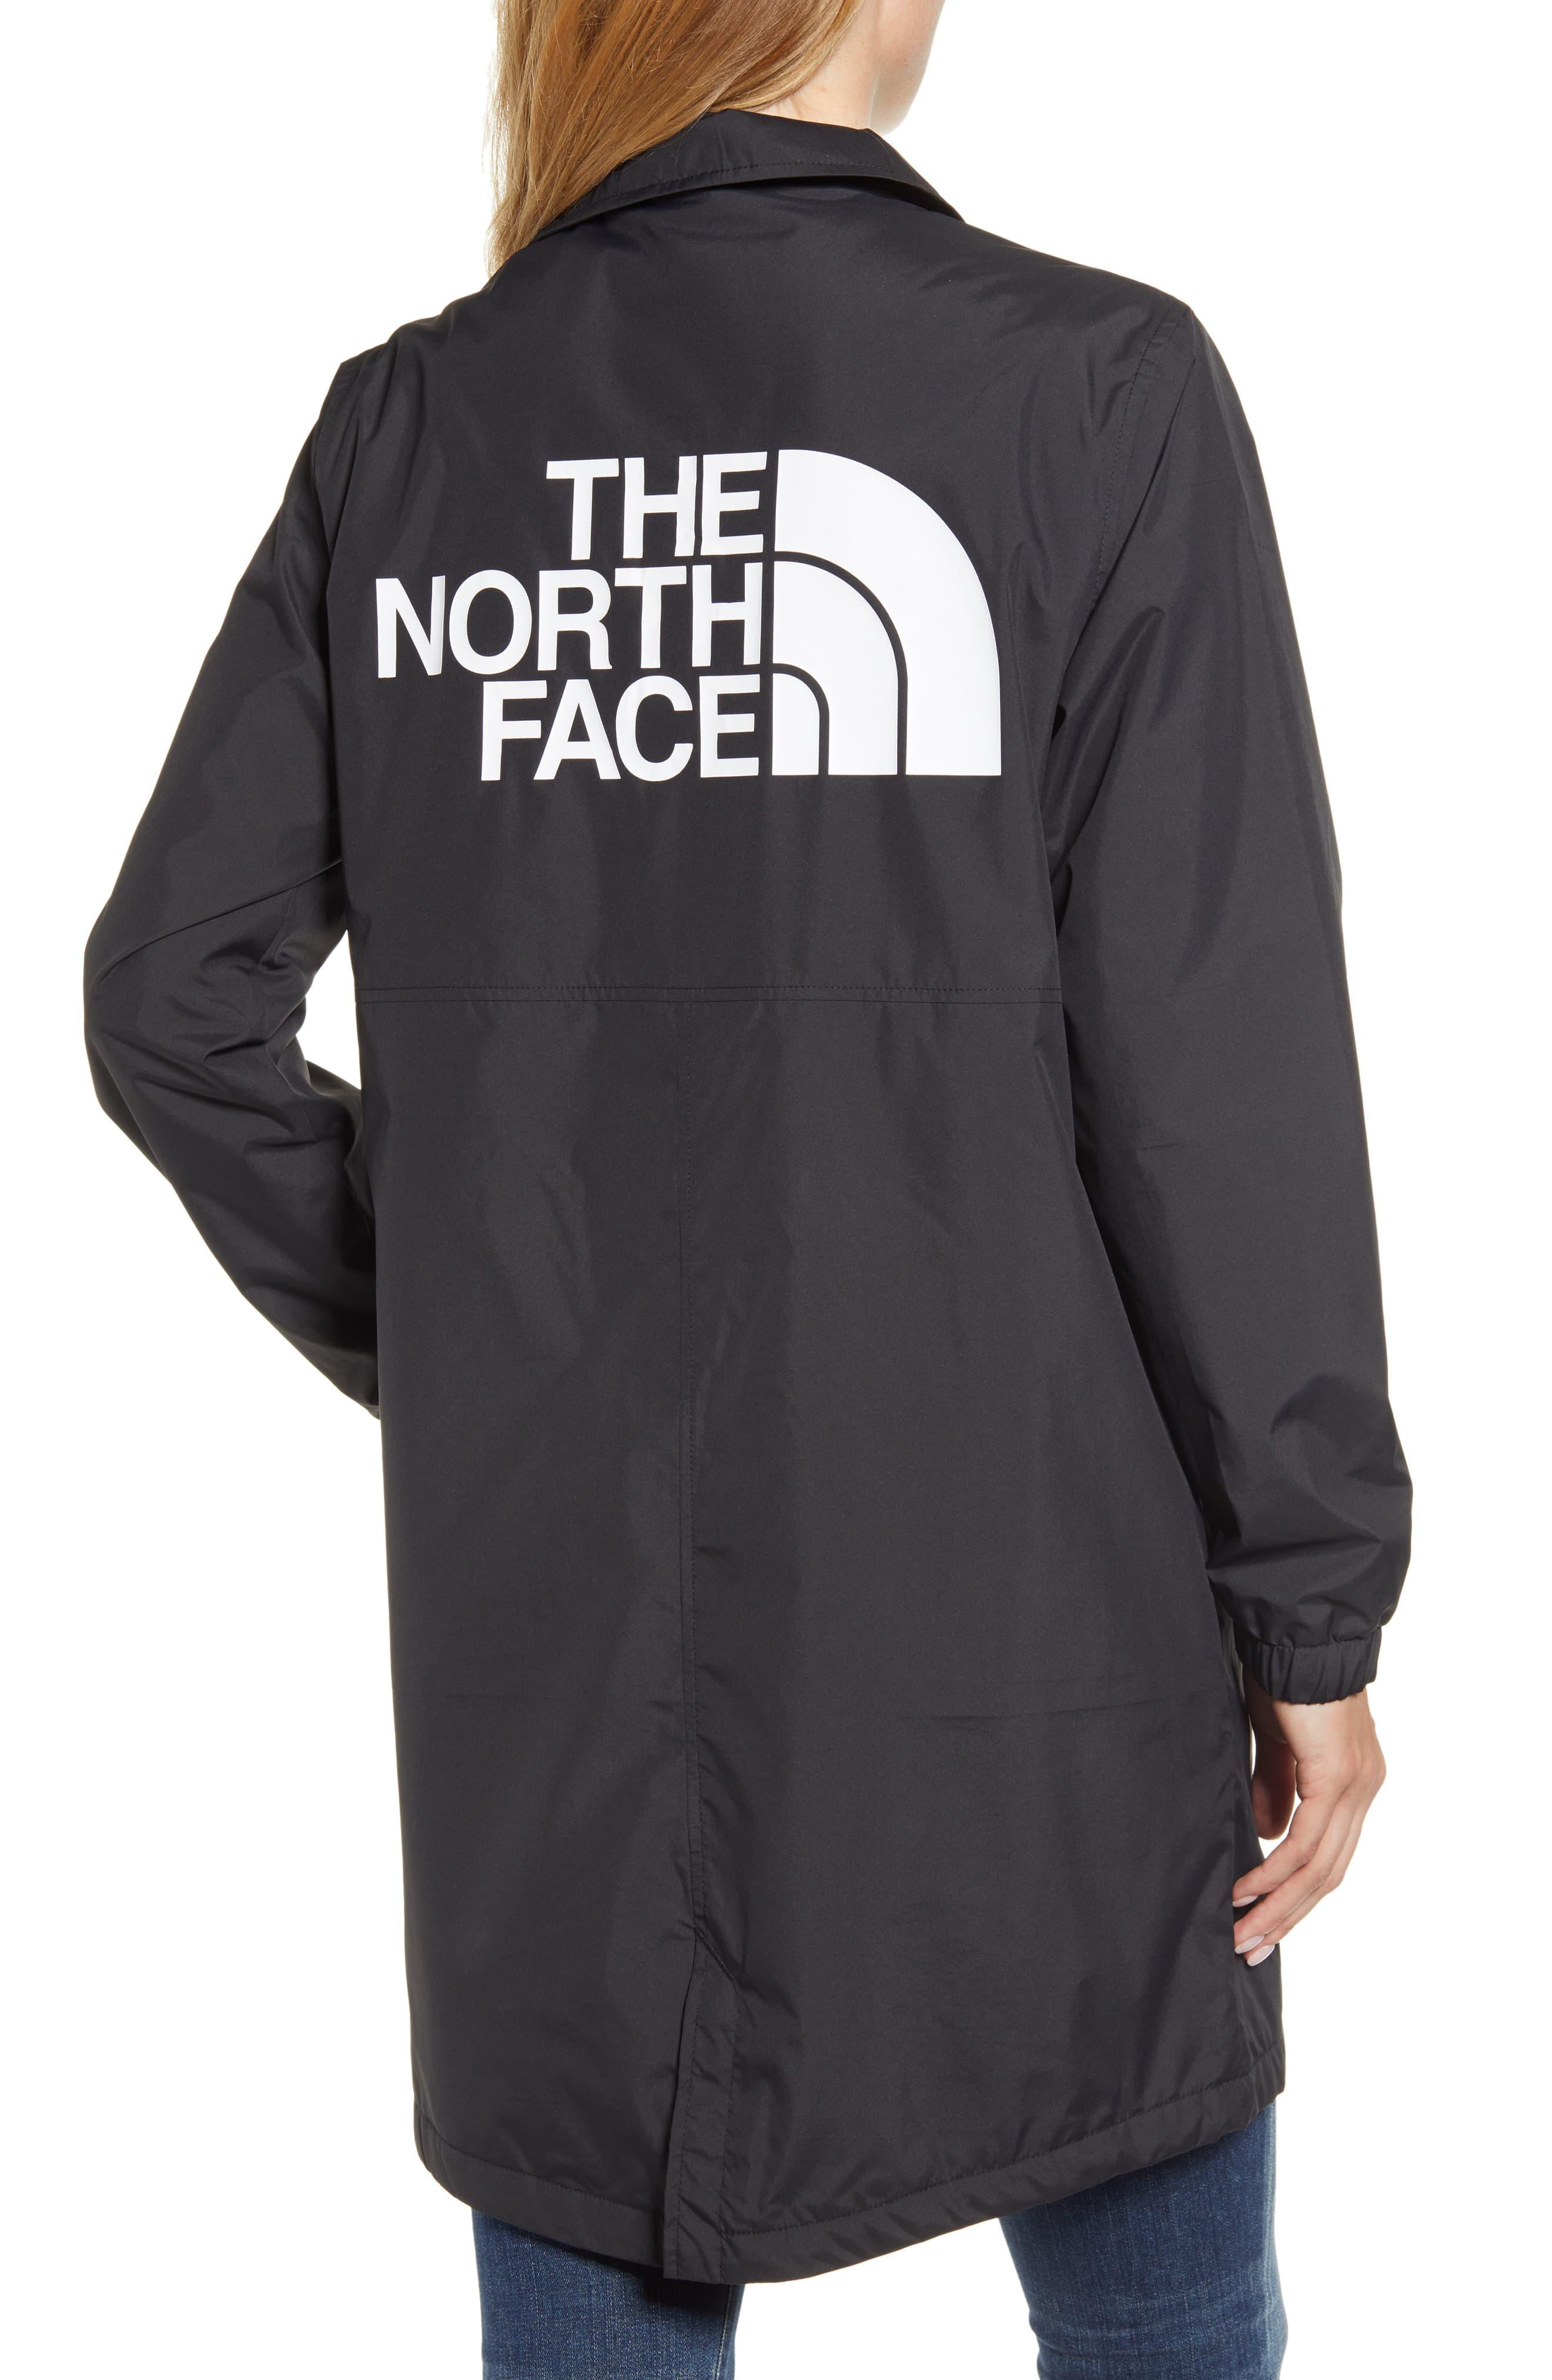 The North Face Fleece Telegraphic Waterproof Coach's Jacket in Black - Lyst